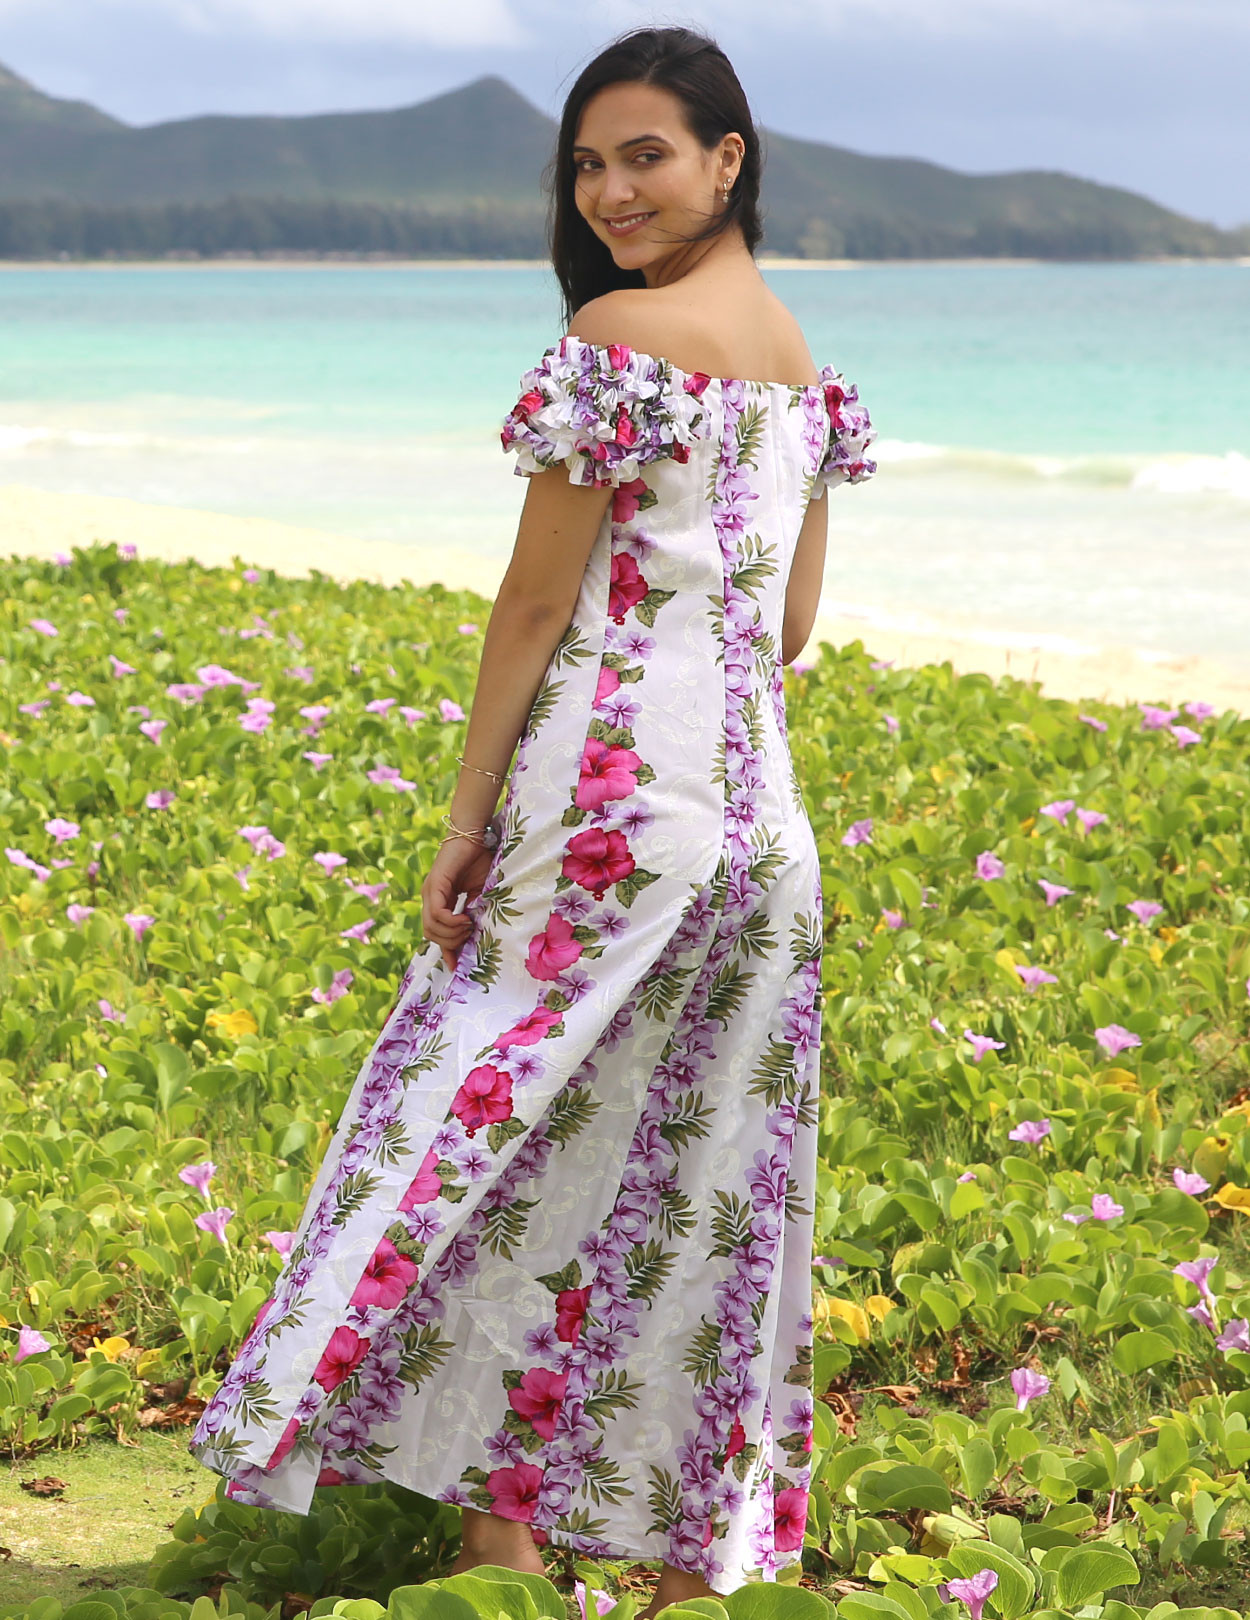 Best Hawaii Wedding Dress Of The Decade Learn More Here Goldweddingdress3